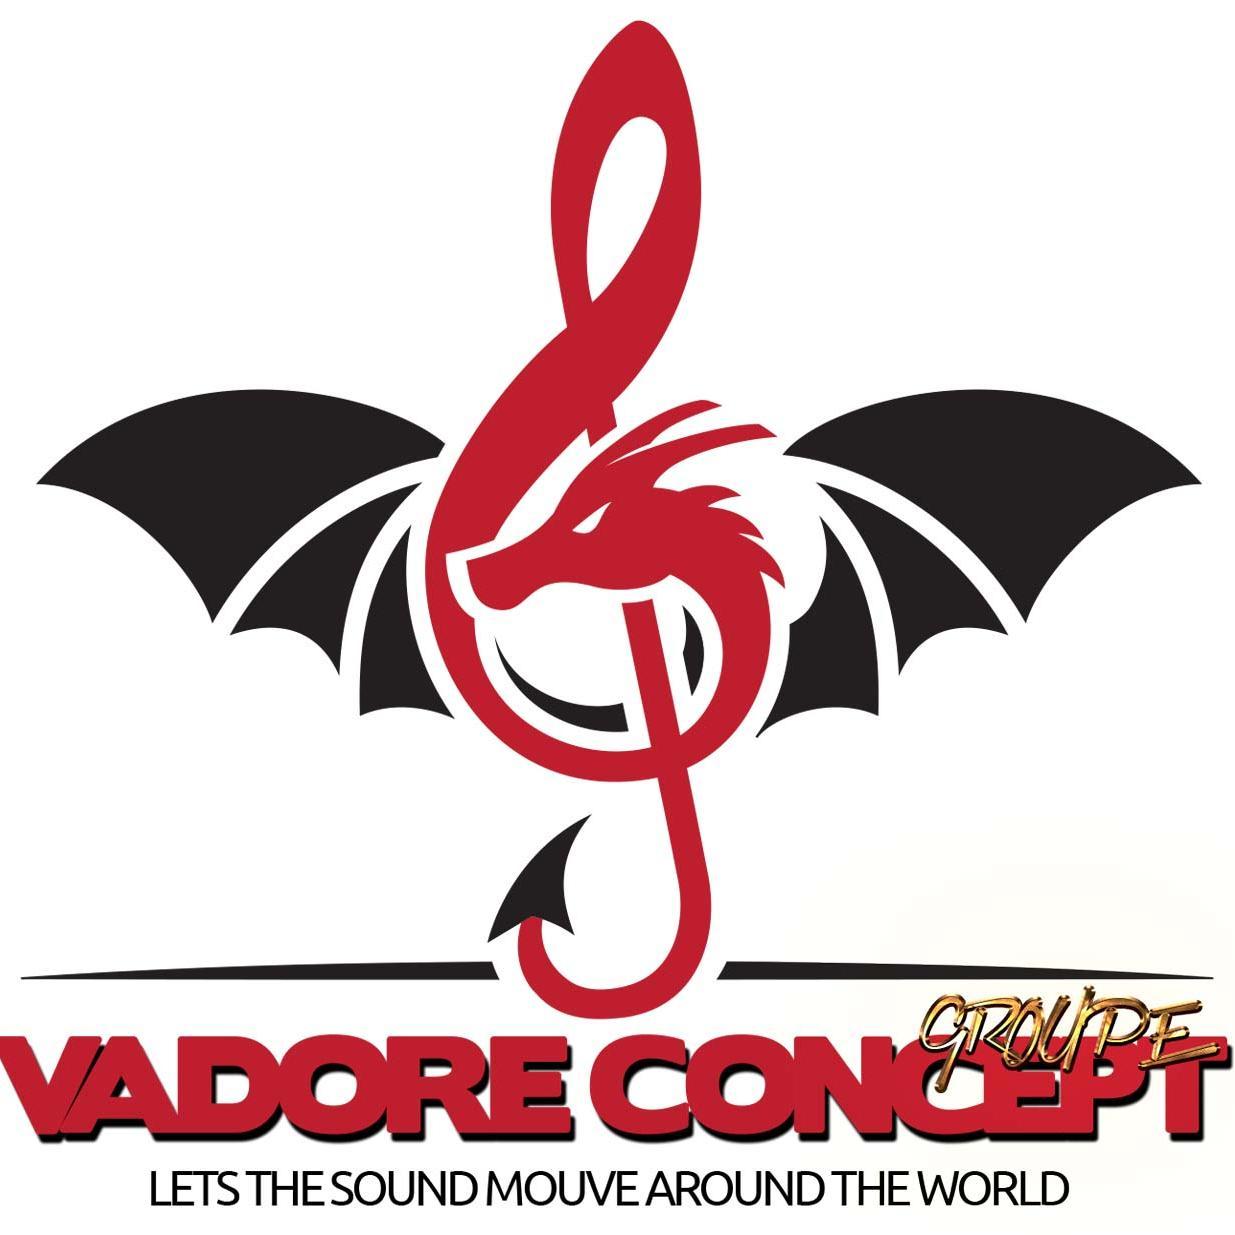 Vadore Concept Group